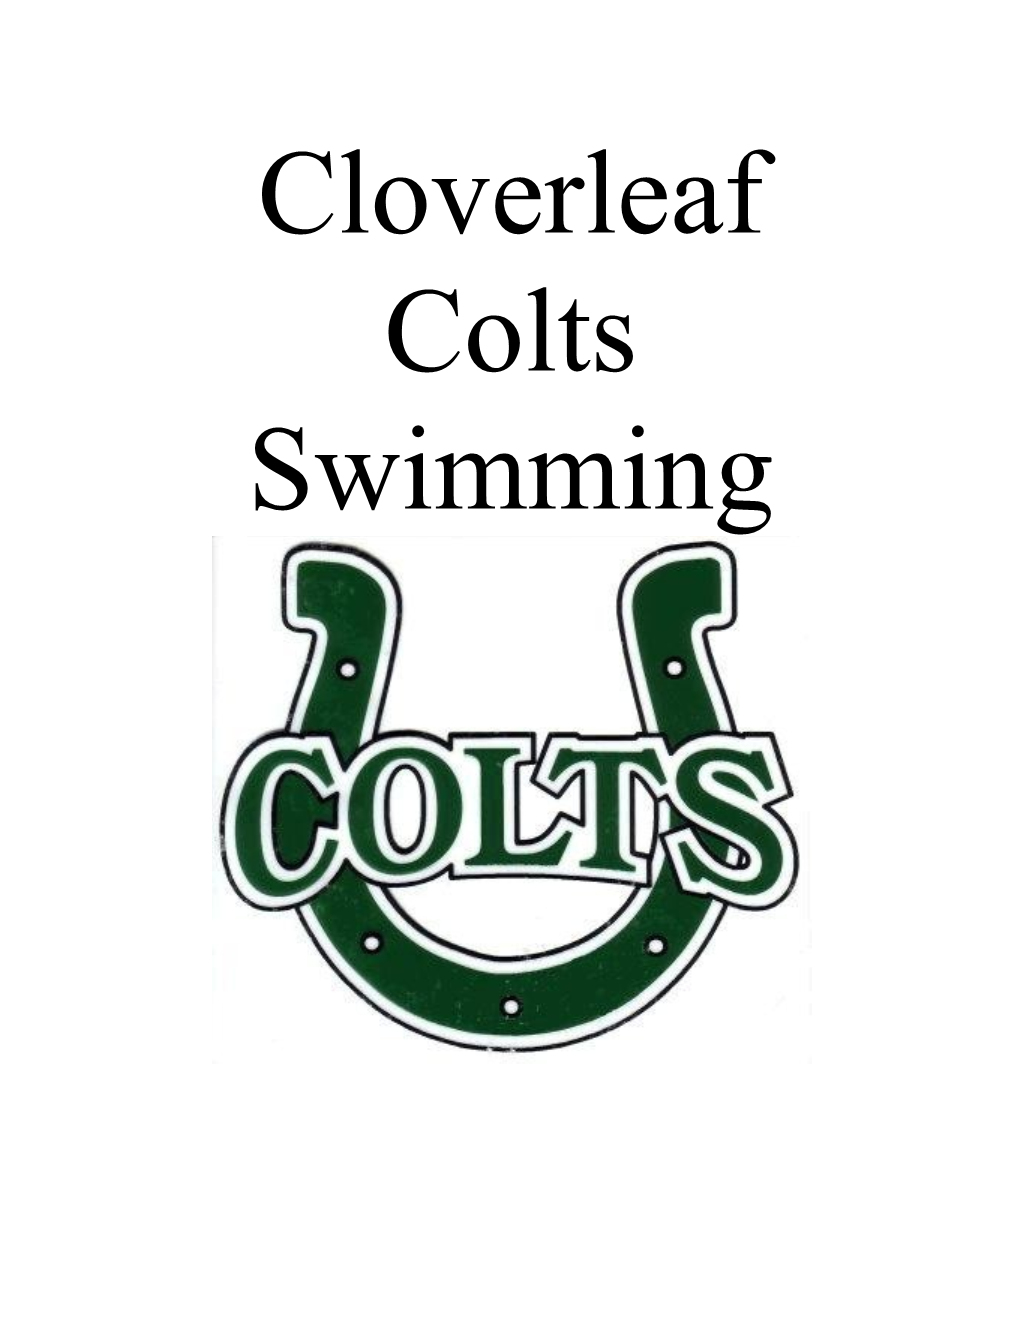 Cloverleaf Colts